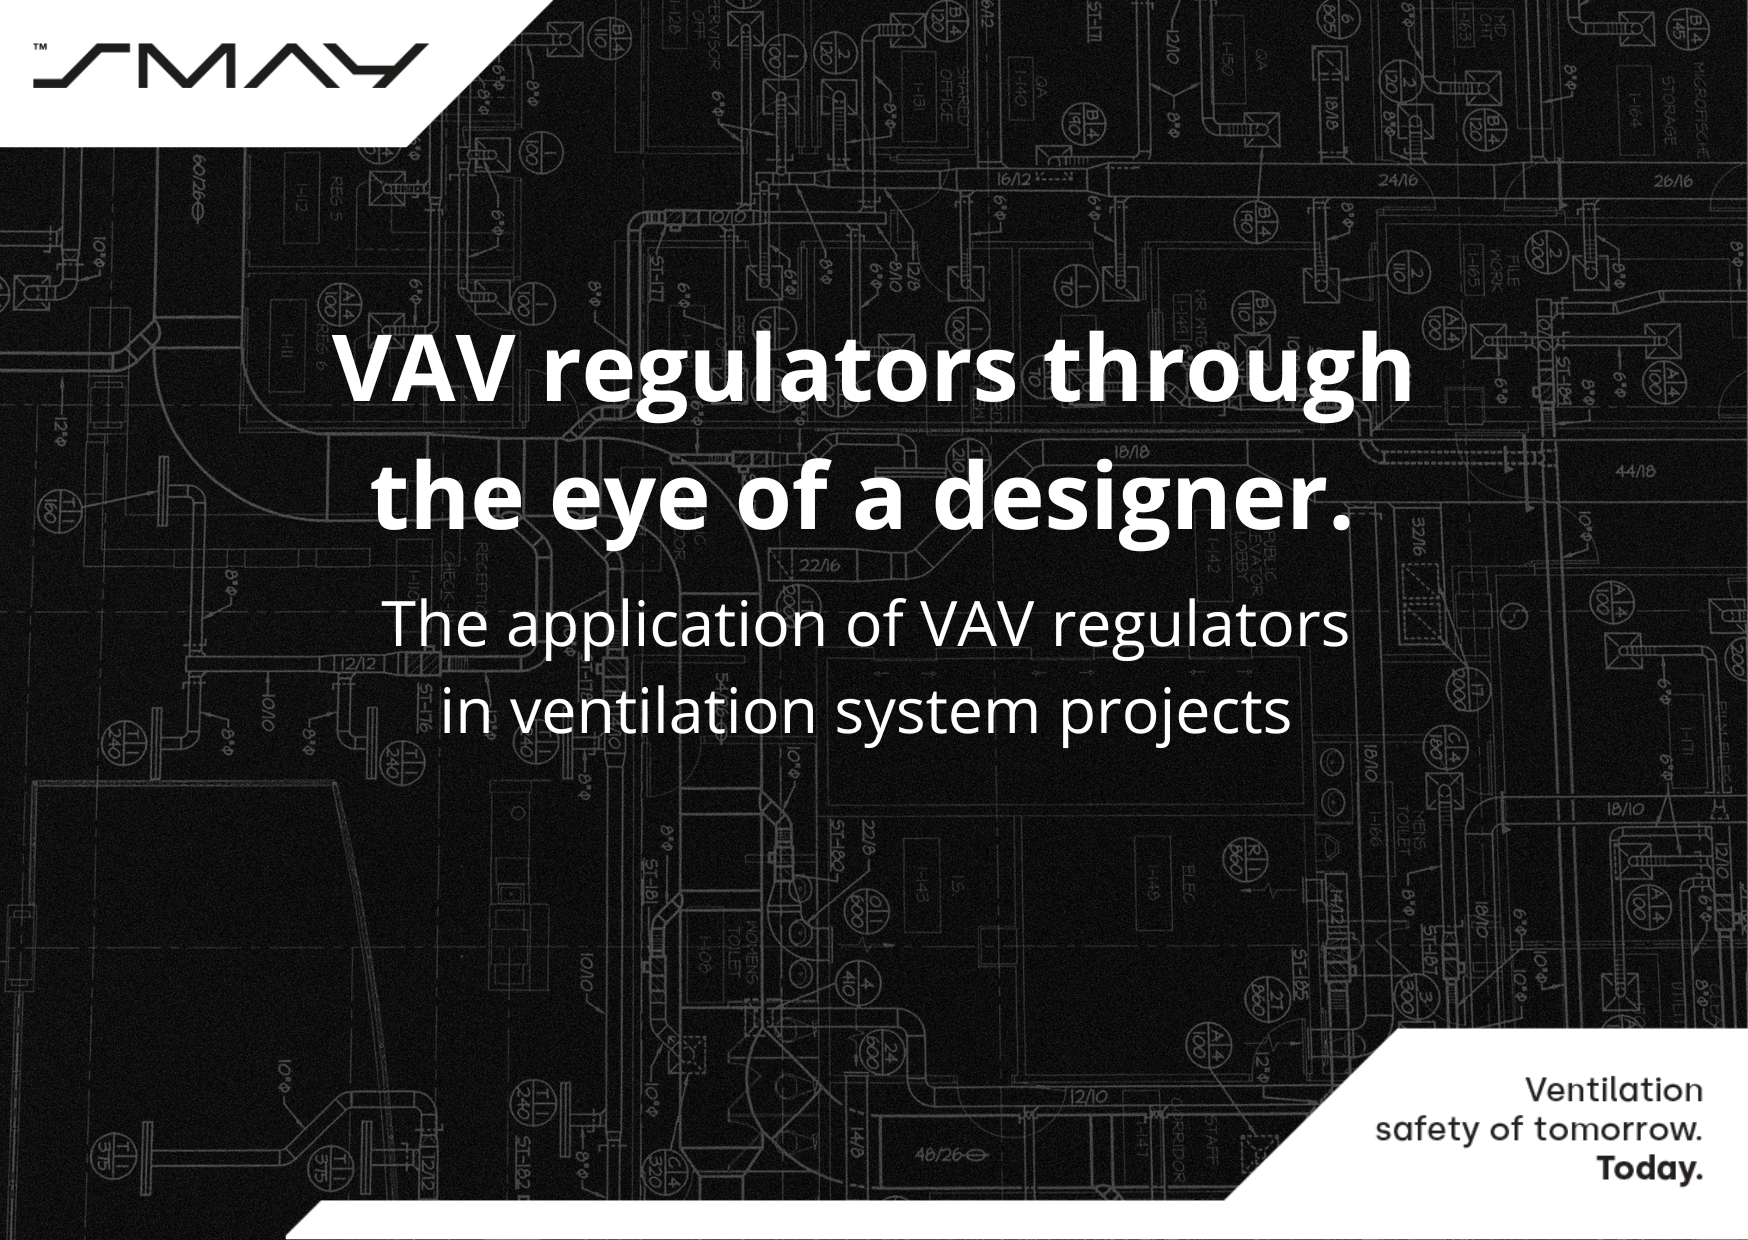 The application of VAV regulators in ventilation system projects